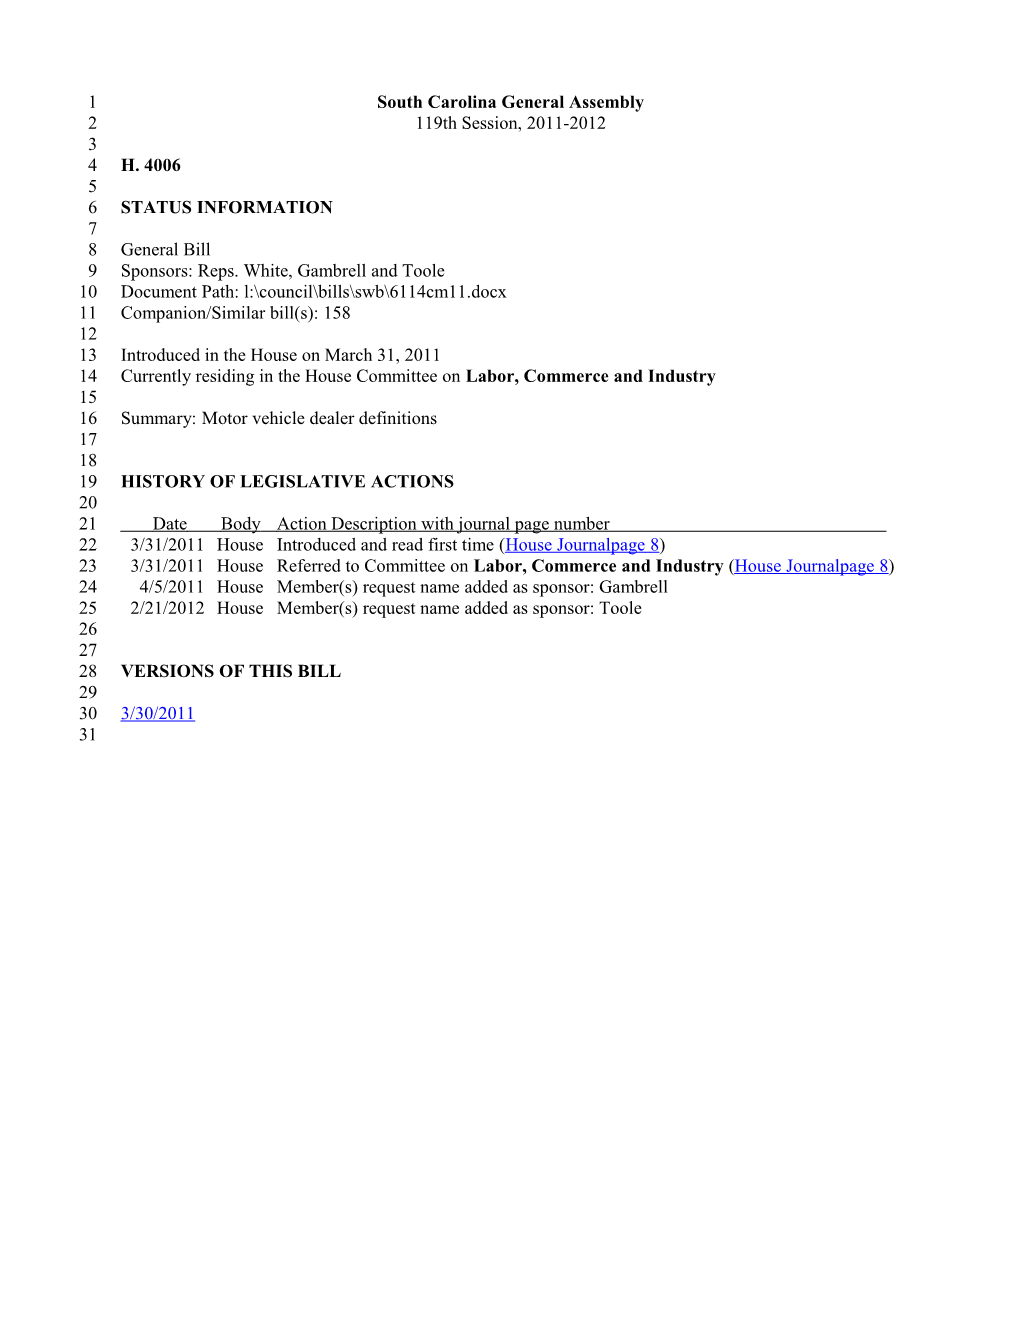 2011-2012 Bill 4006: Motor Vehicle Dealer Definitions - South Carolina Legislature Online